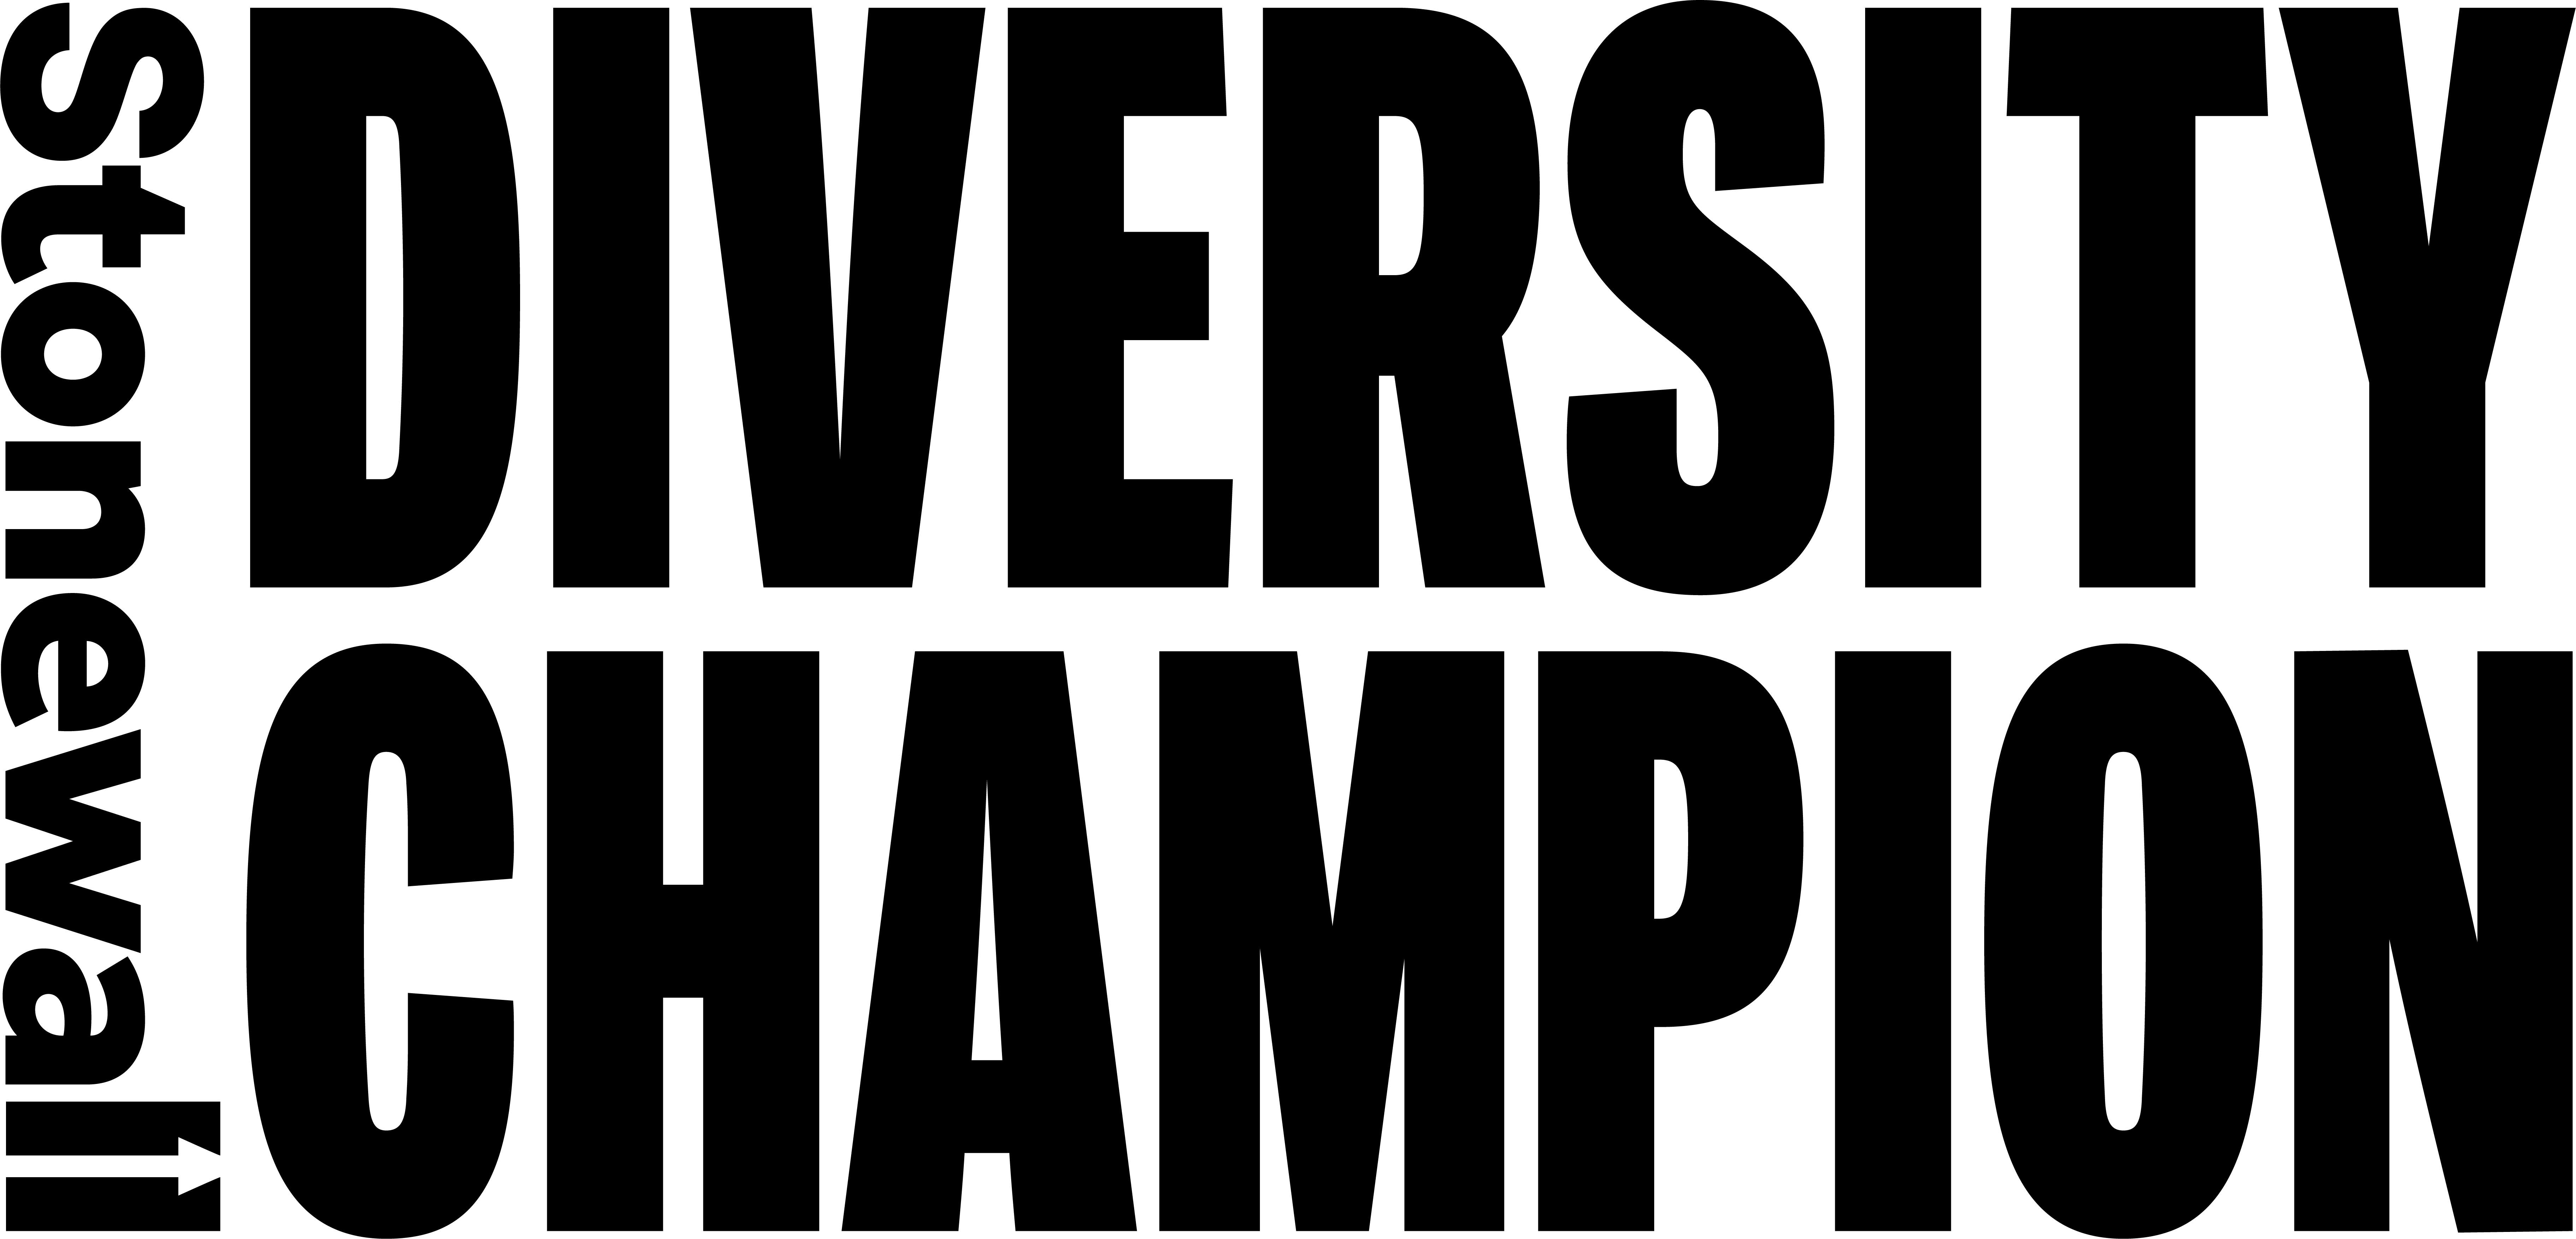 Diversity Champion Logo.jpg